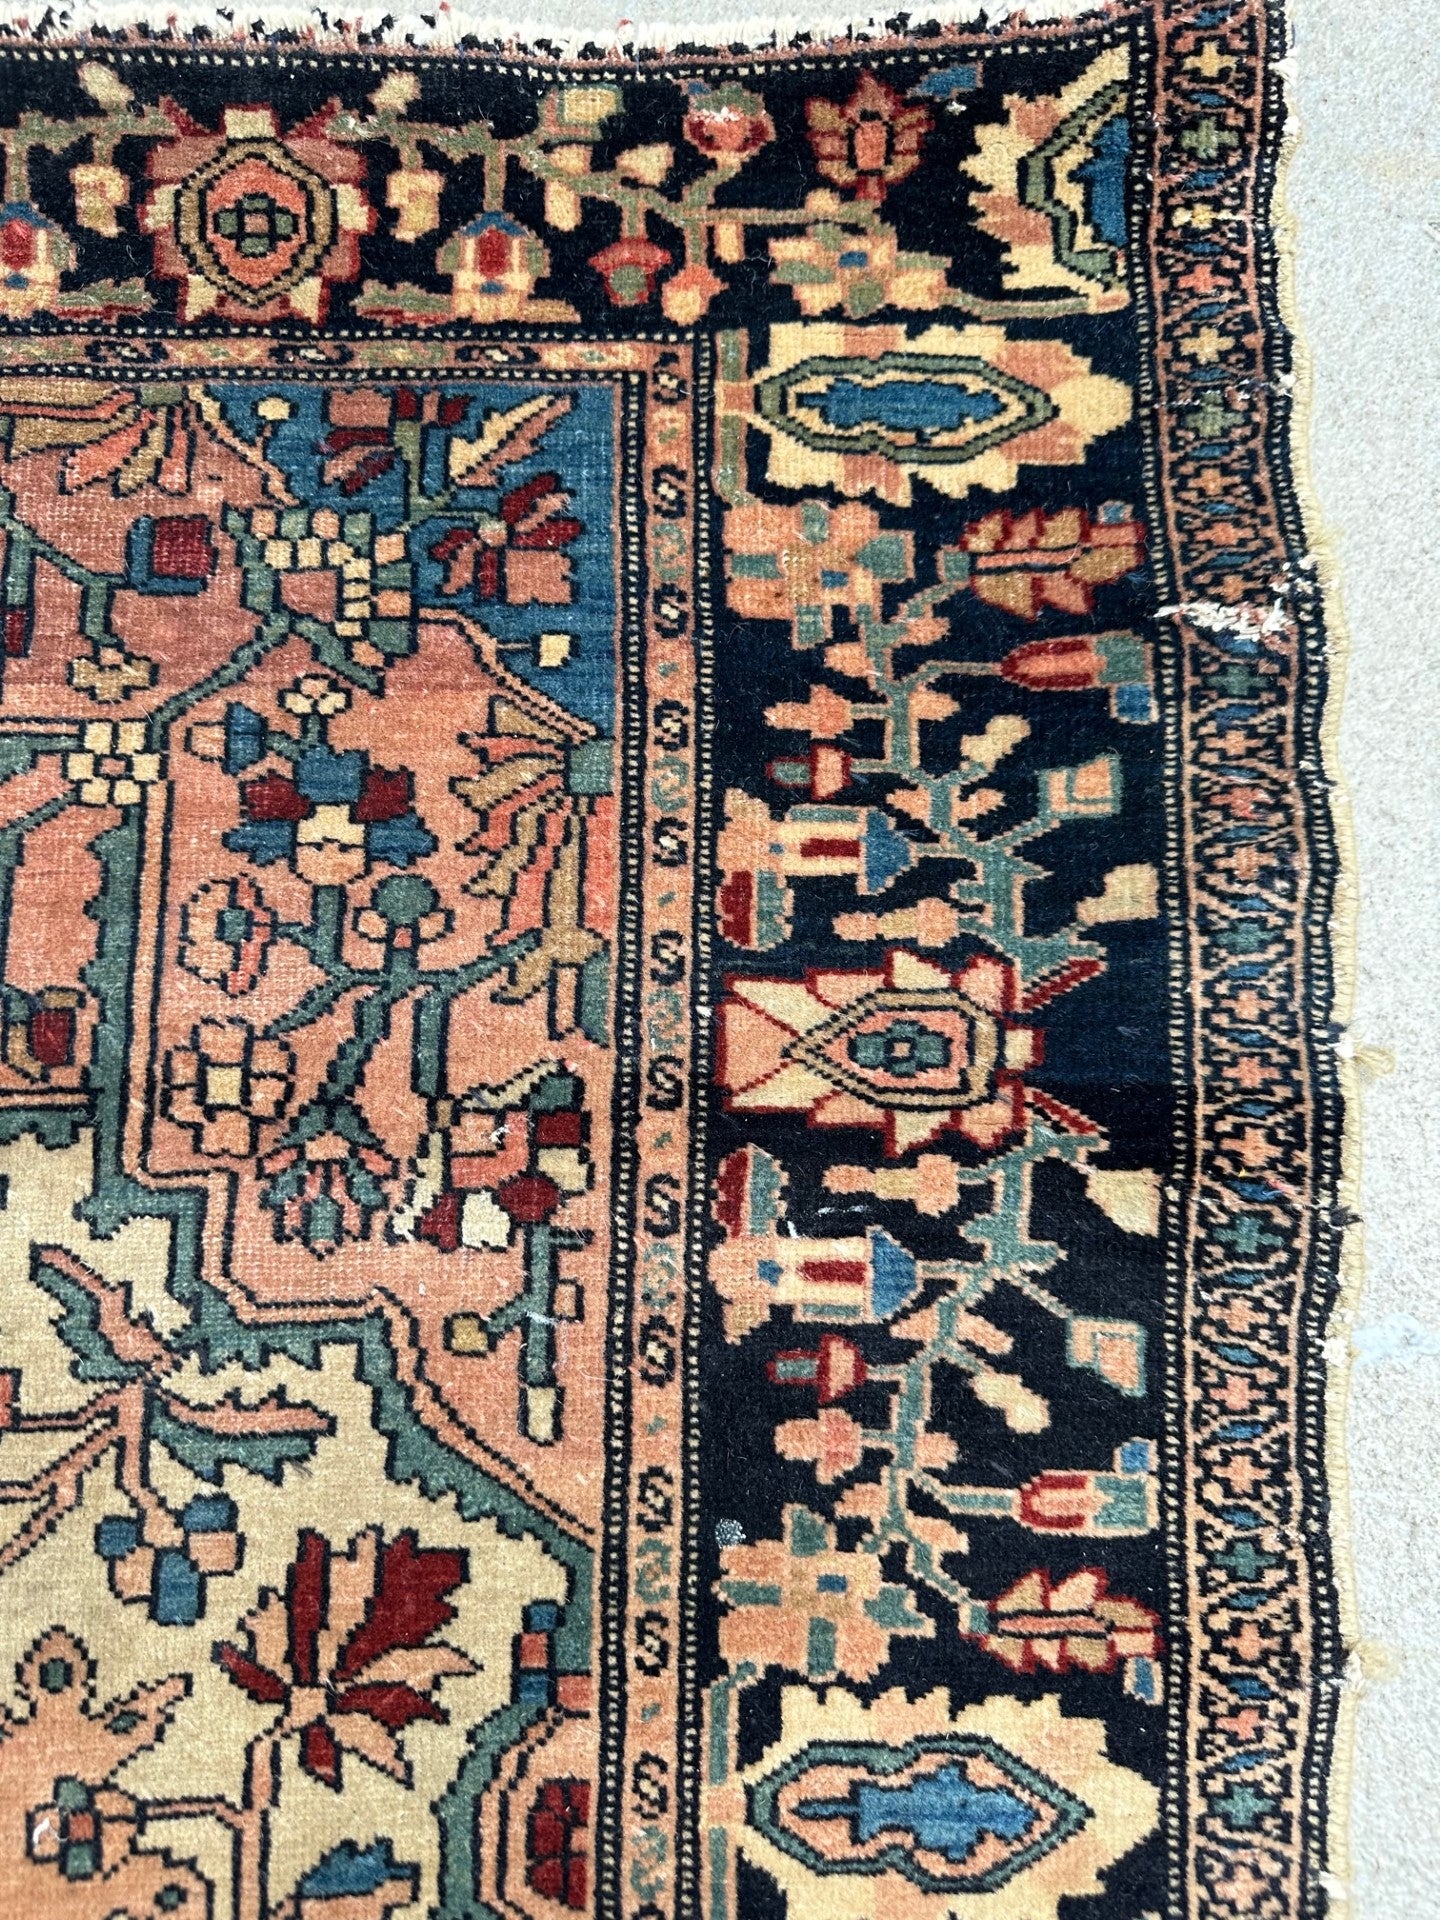 3'x5' Antique Persian Farahan Rug